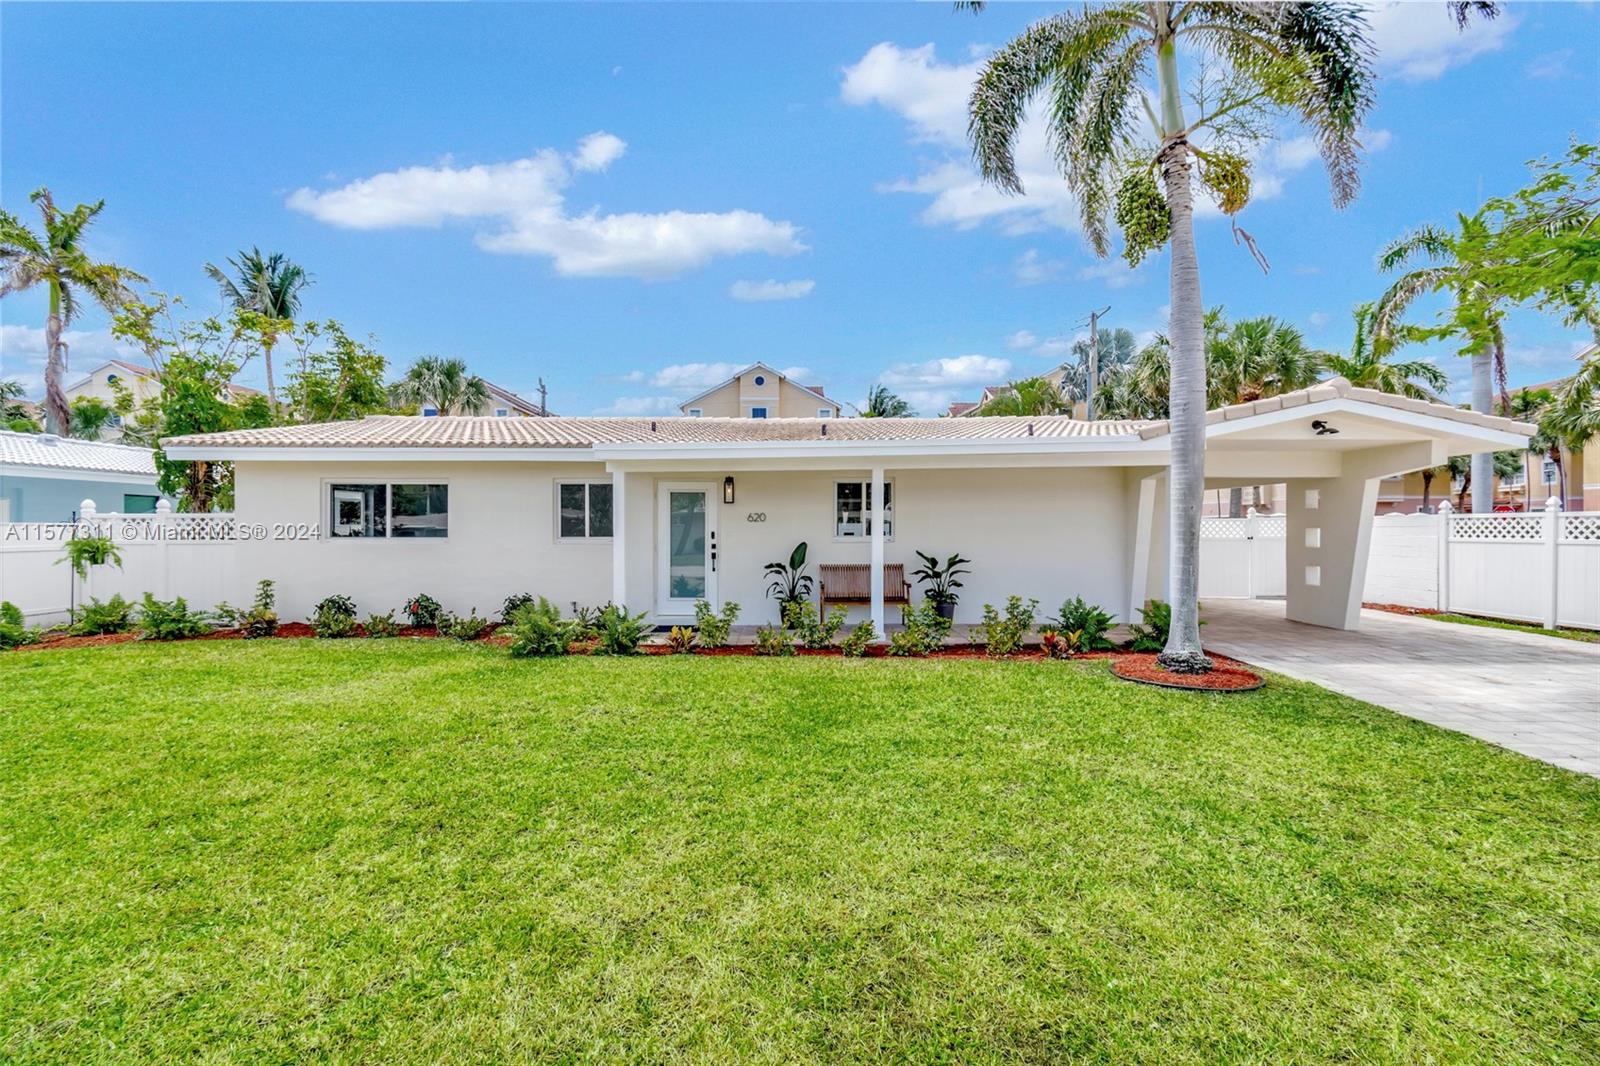 Property for Sale at 620 Las Palmas Park, Boynton Beach, Palm Beach County, Florida - Bedrooms: 2 
Bathrooms: 2  - $709,900